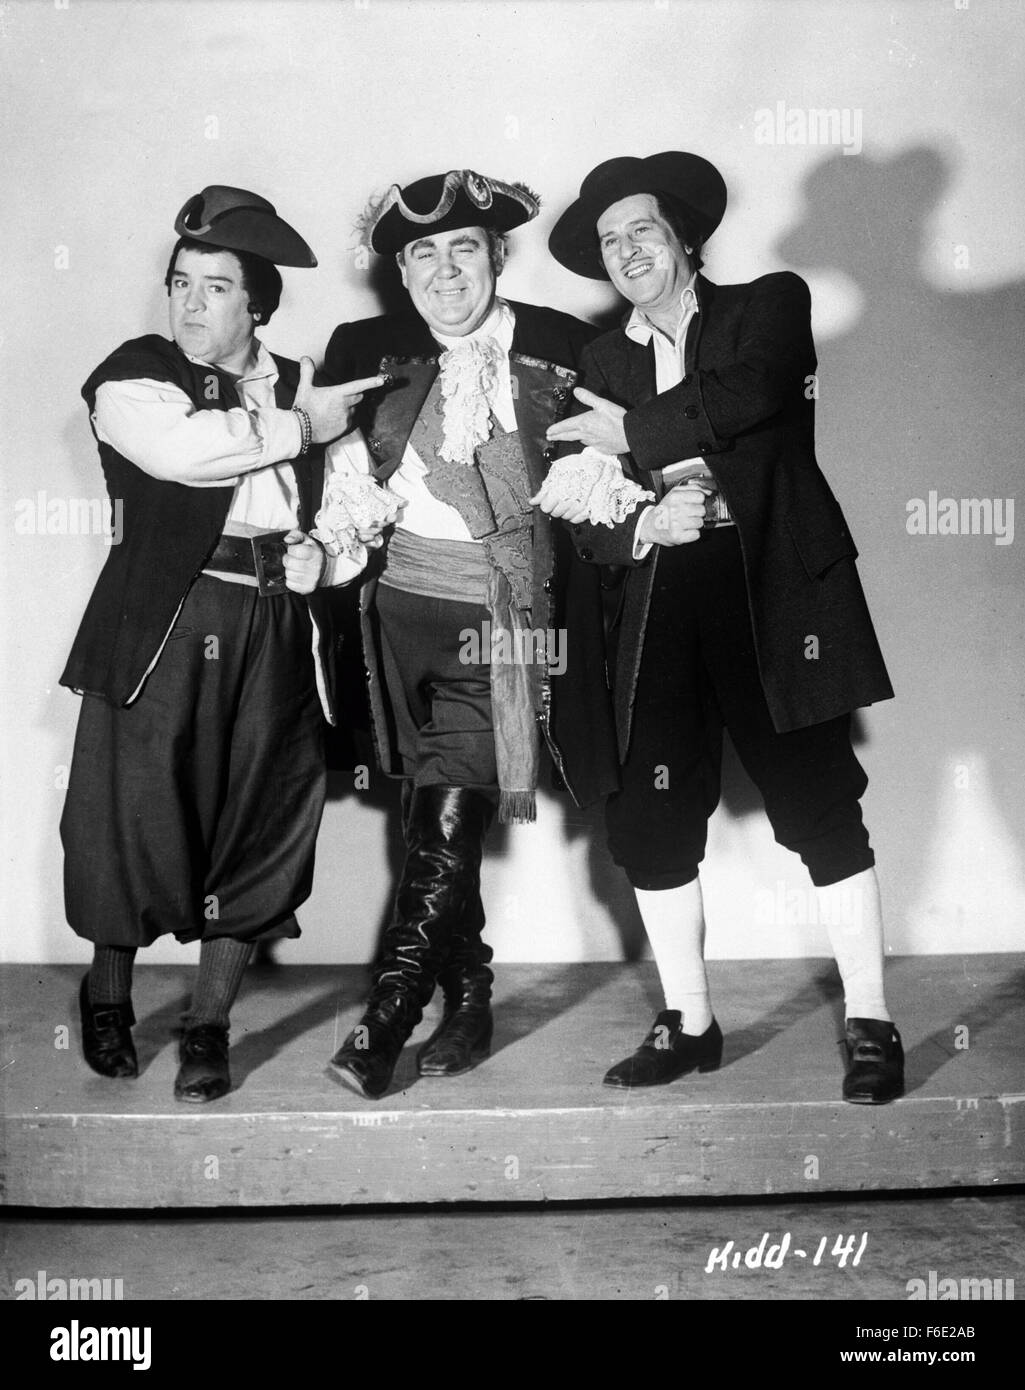 RELEASED: Dec 27, 1952 - Original Film Title: Abbott and Costello Meet Captain Kidd. PICTURED: CHARLES LAUGHTON, BUD ABBOTT, LOU COSTELLO. . Stock Photo